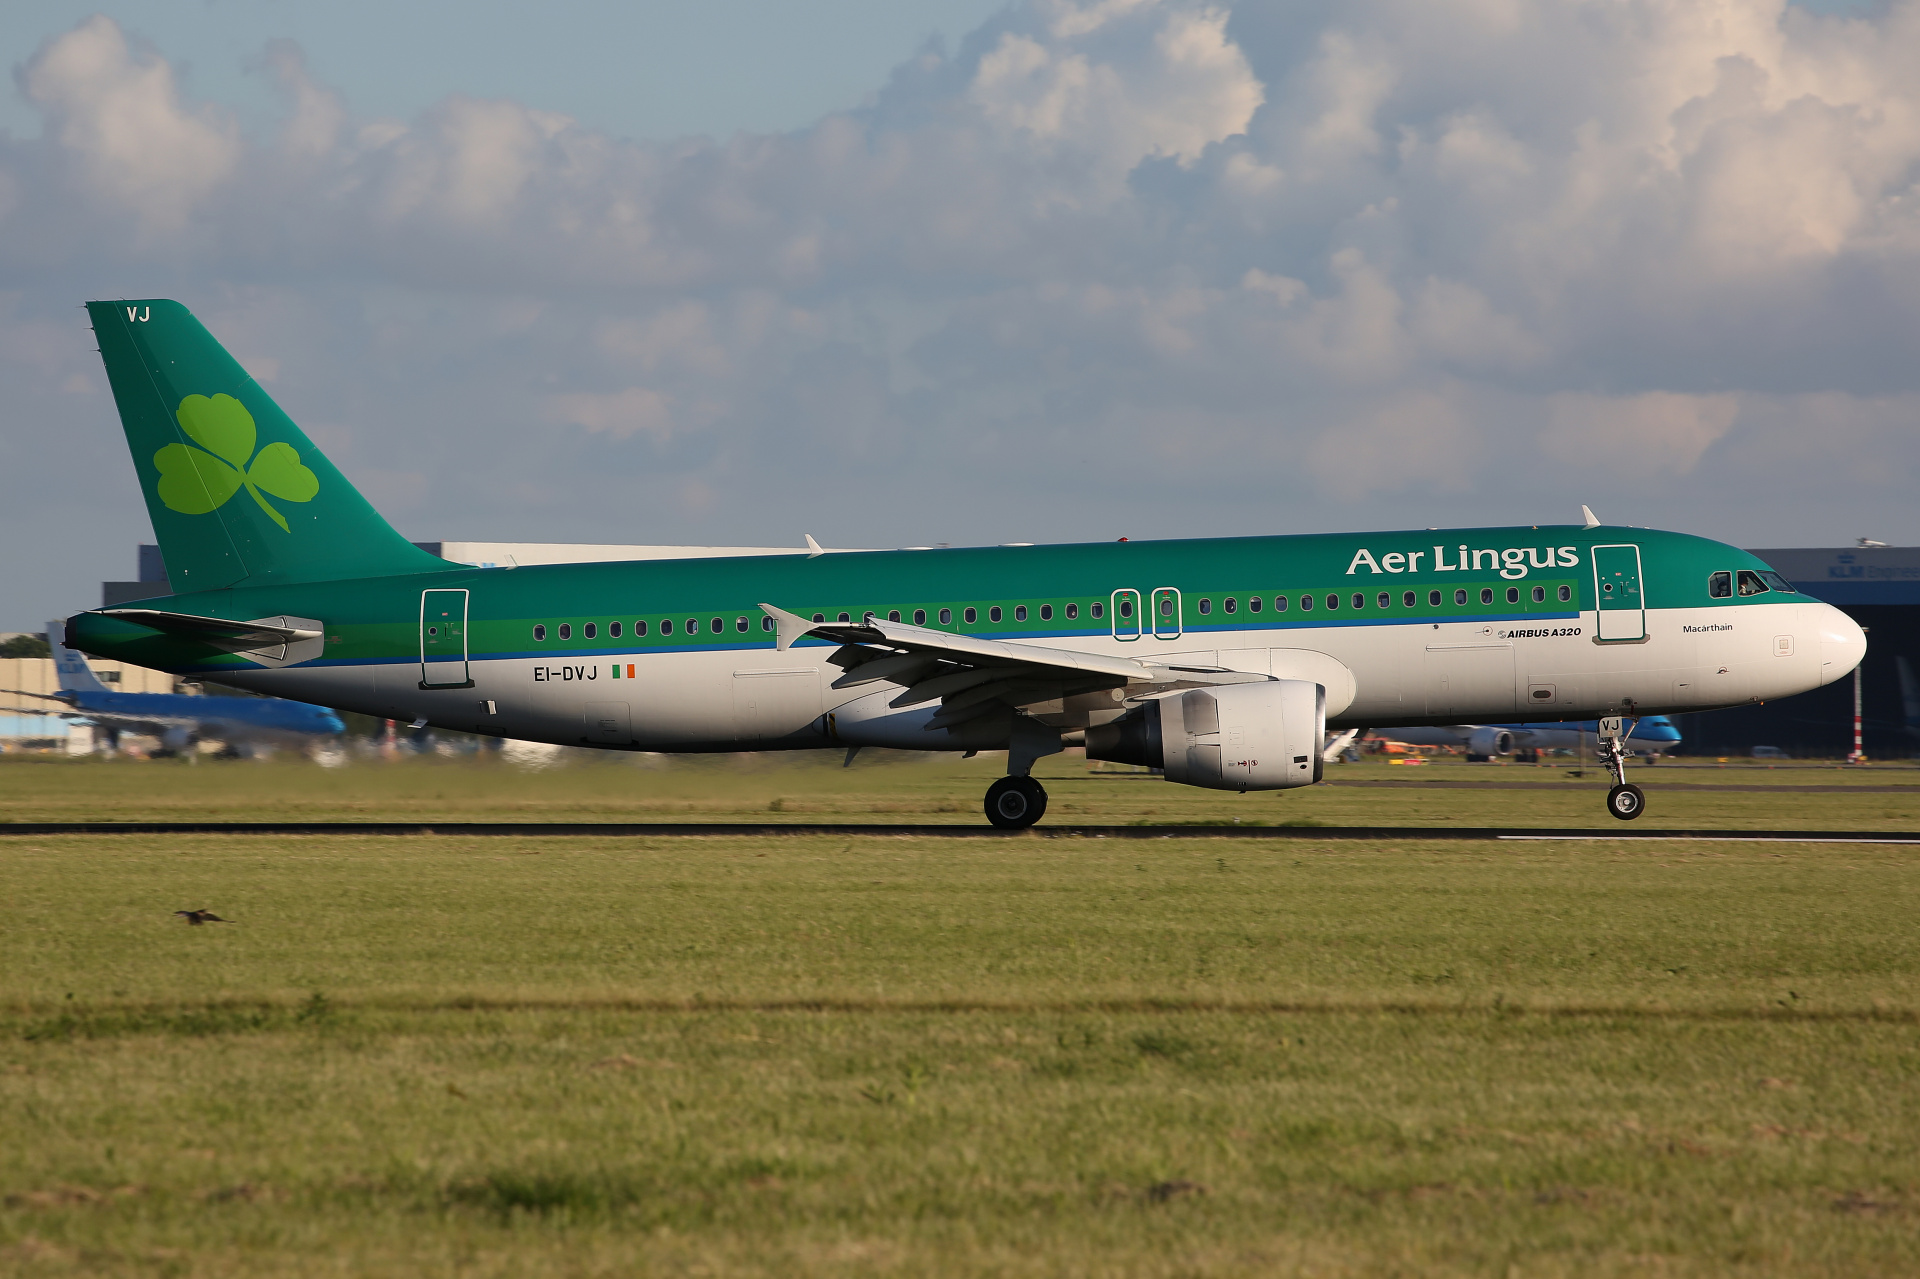 EI-DVJ, Aer Lingus (Aircraft » Schiphol Spotting » Airbus A320-200)